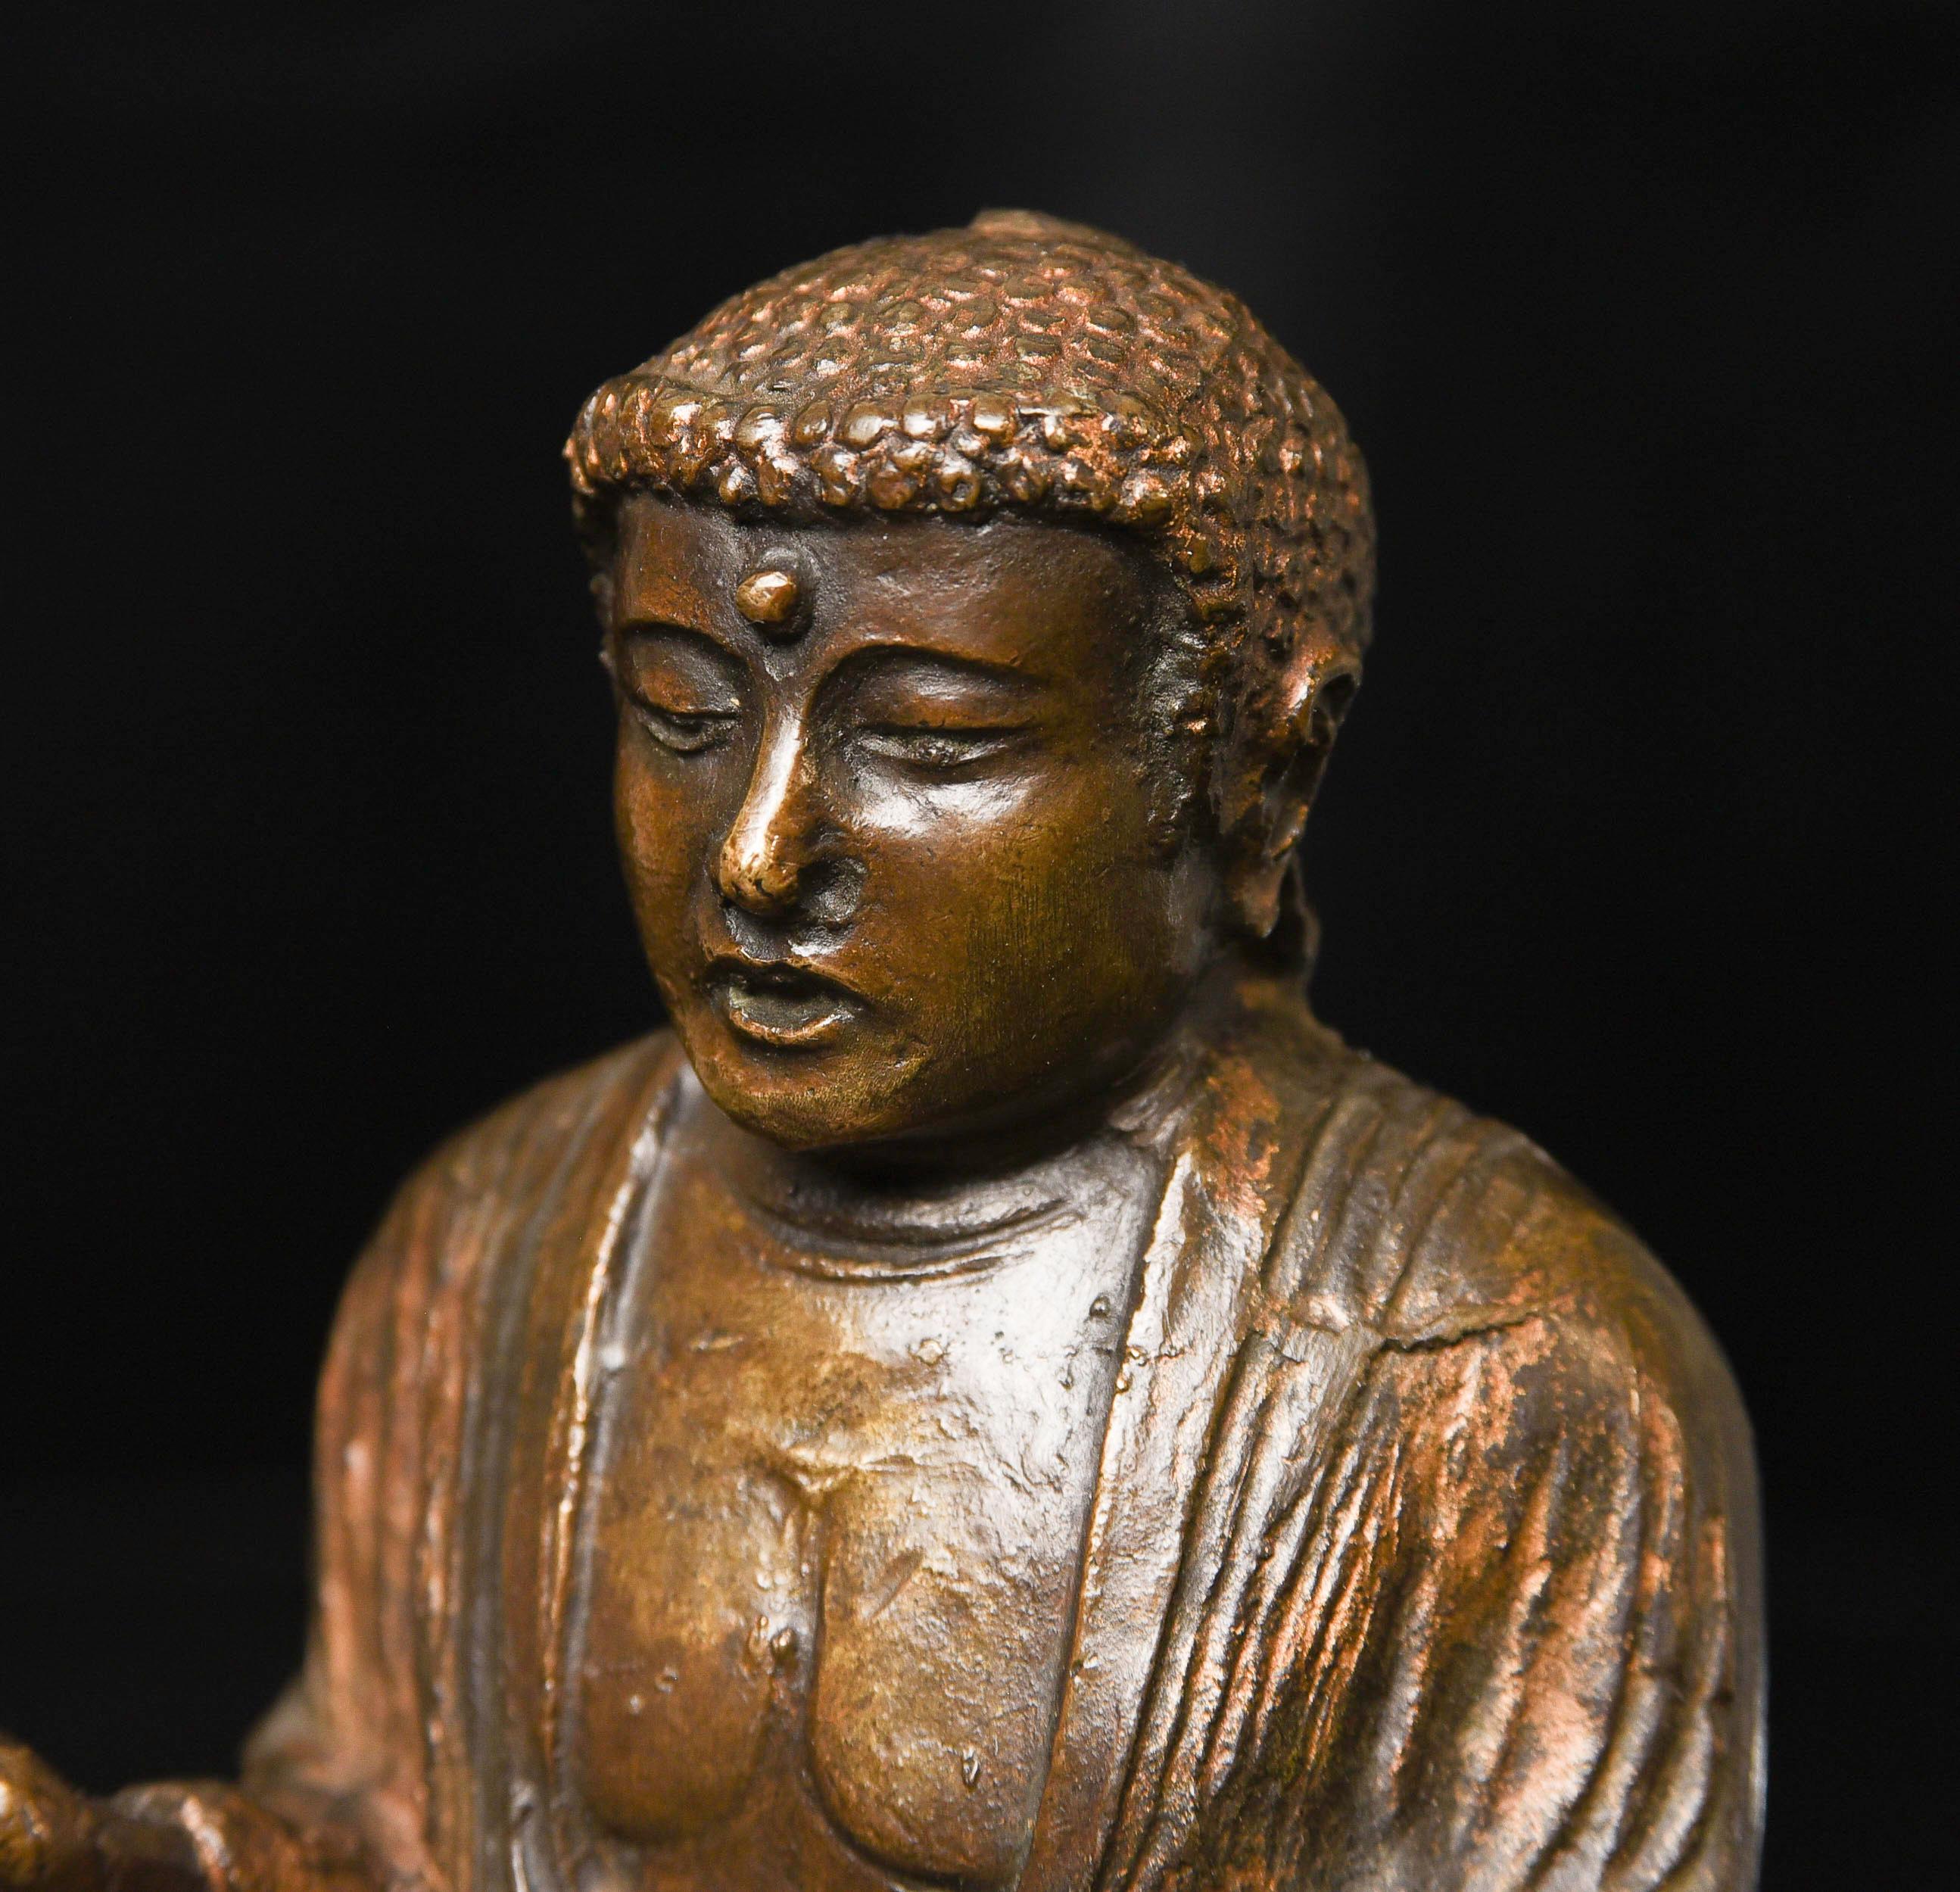 Antique Korean or Japanese Buddha - 9719 2